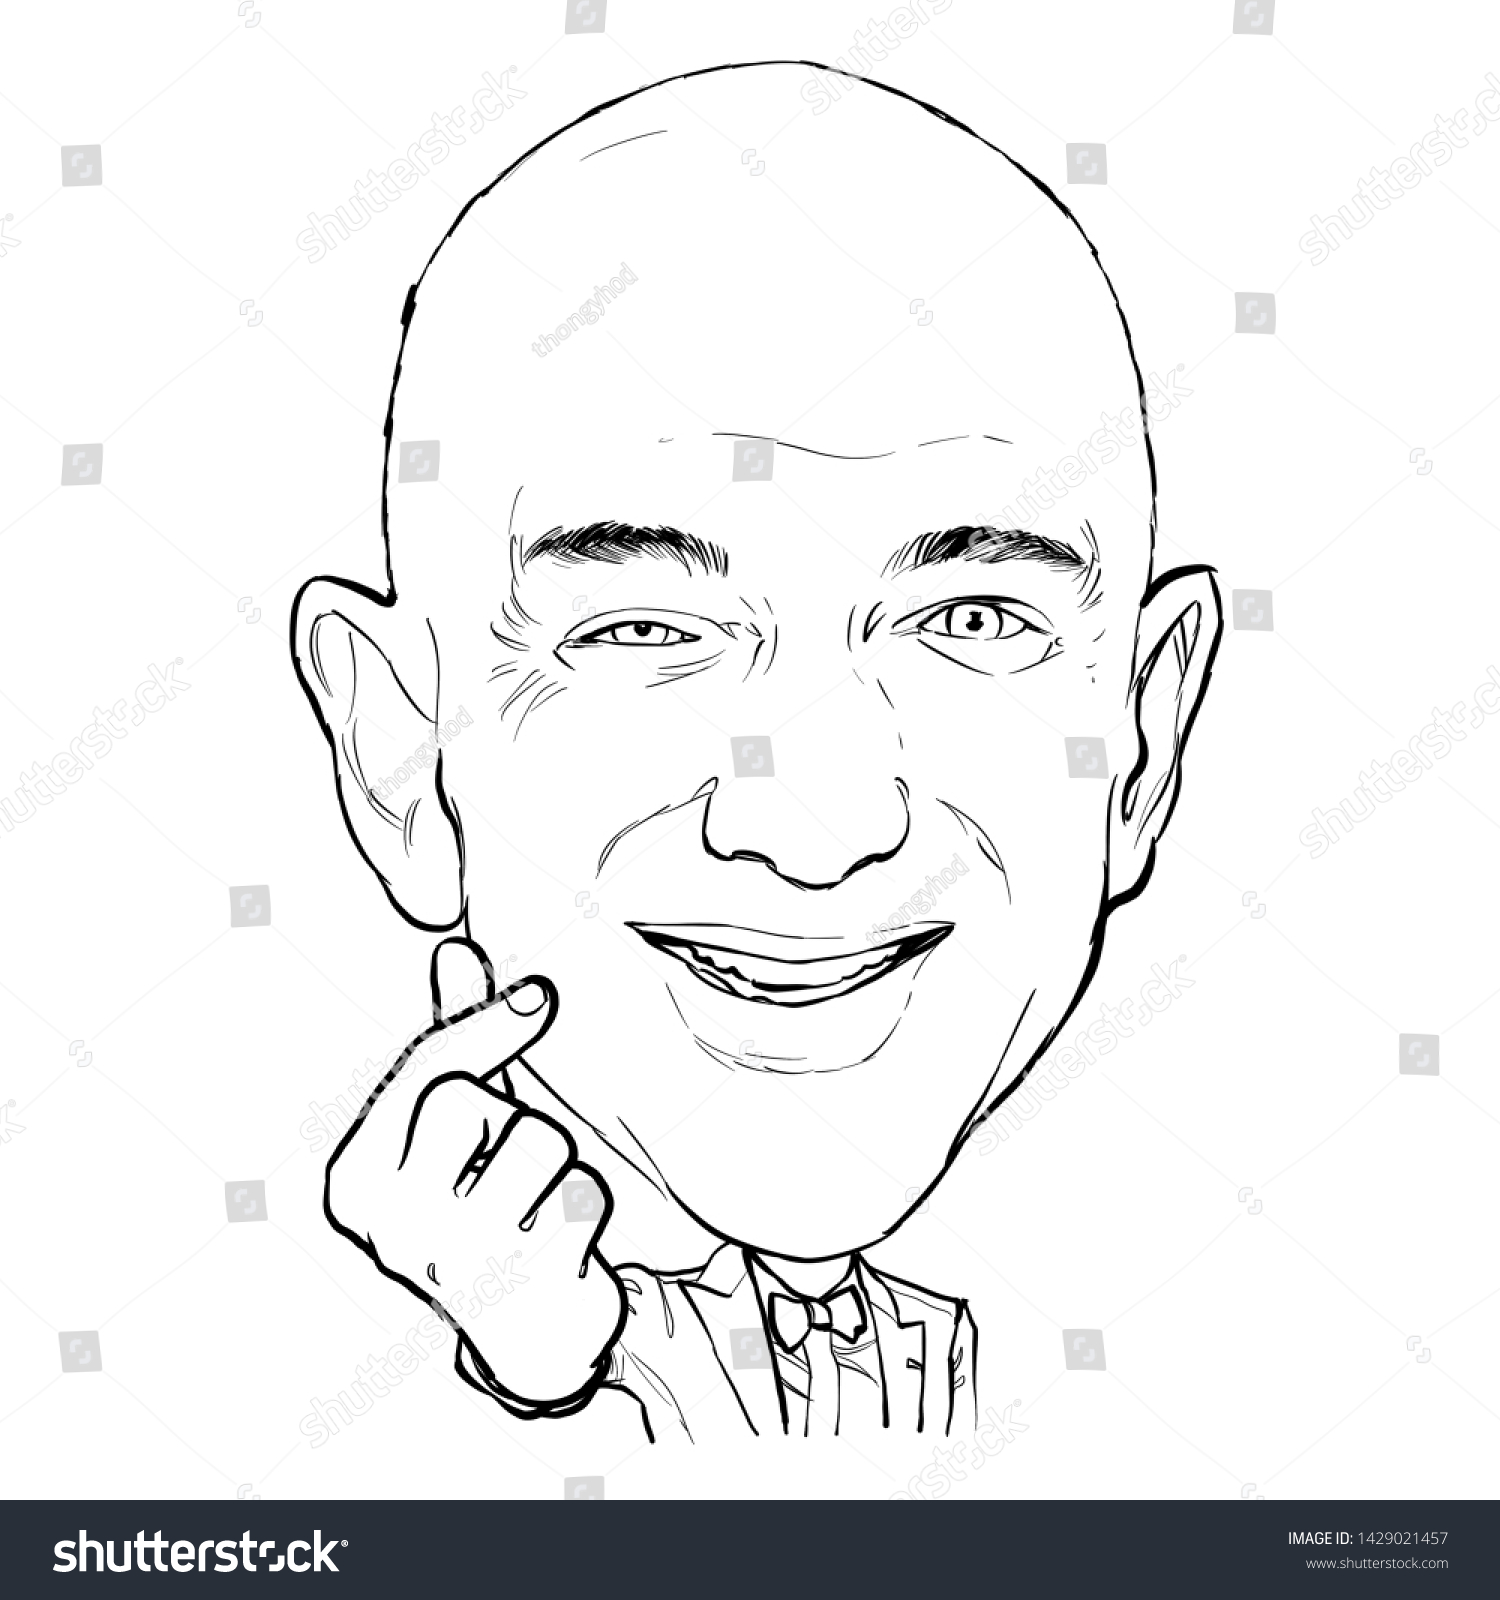 June 20 2019 Caricature Jeff Bezos Stock Illustration 1429021457 ...